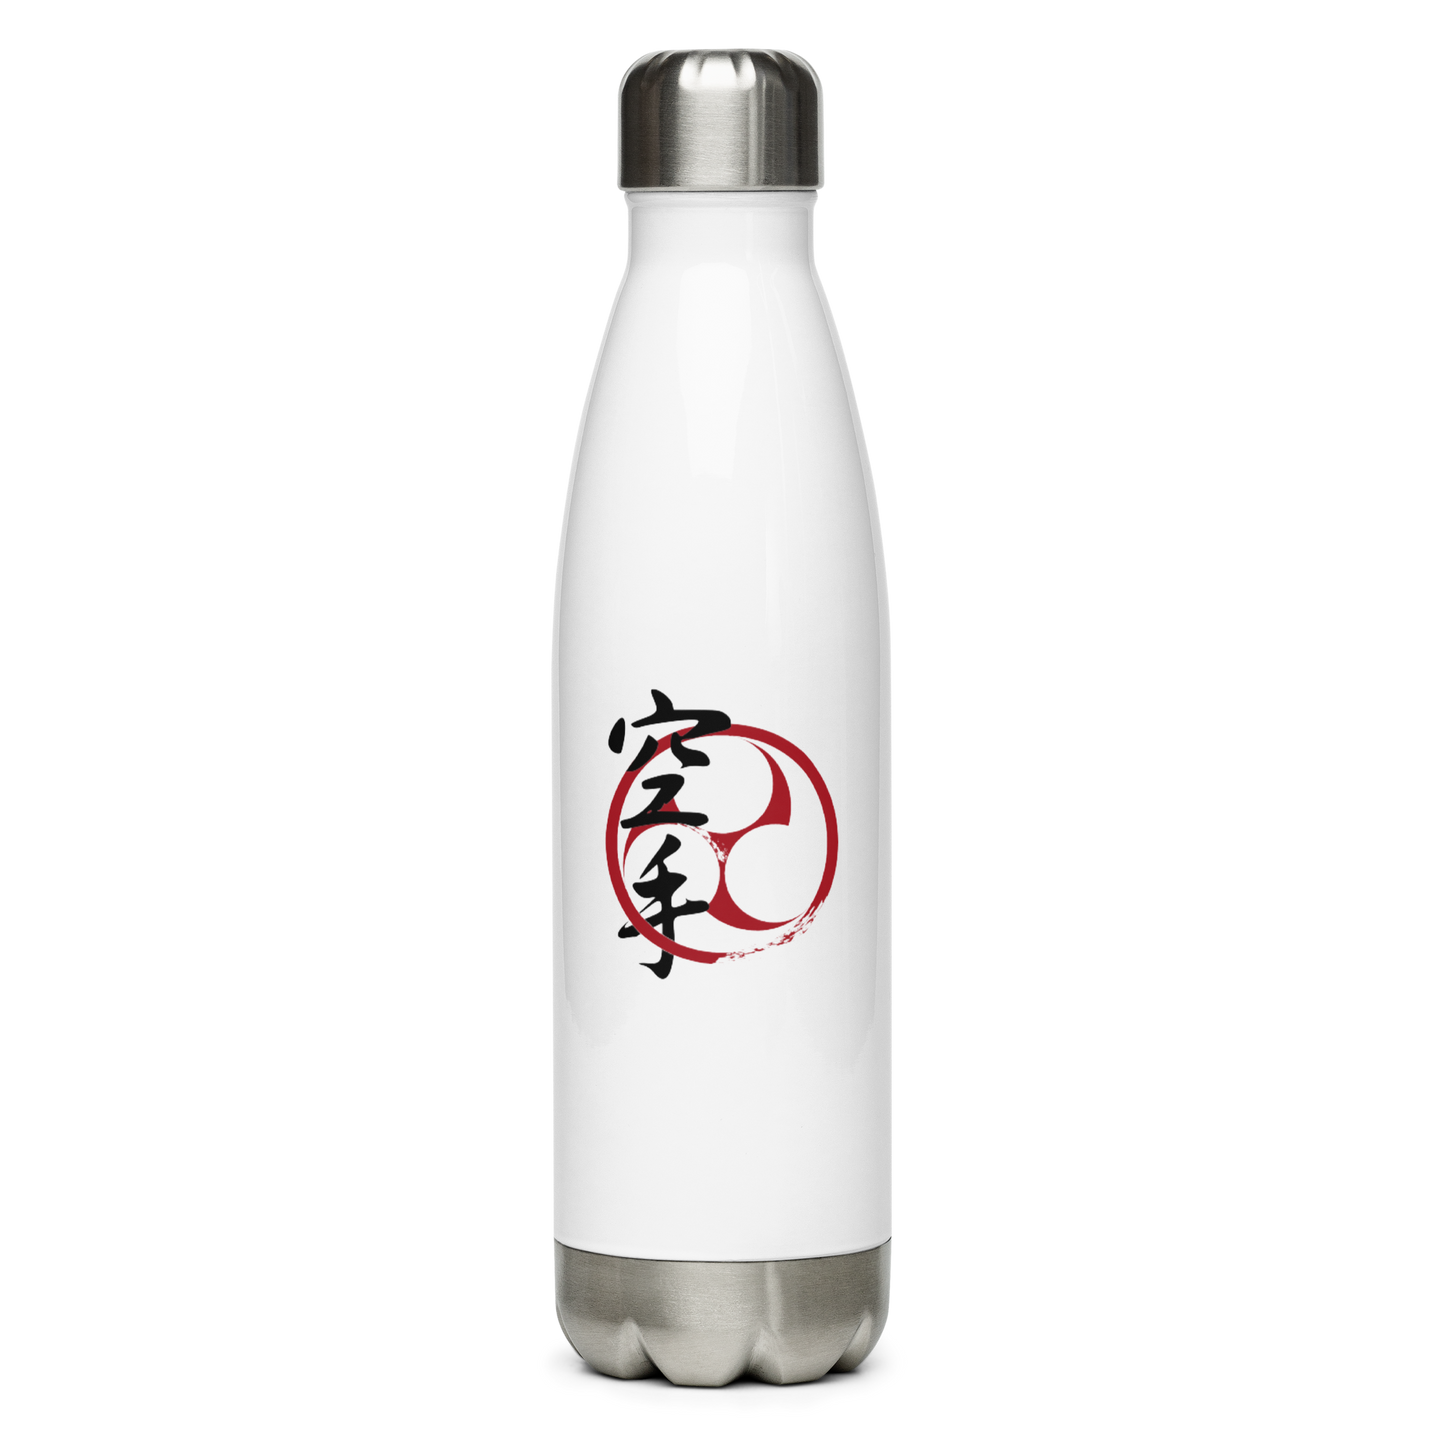 Karate Mom Stainless Steel Water Bottle